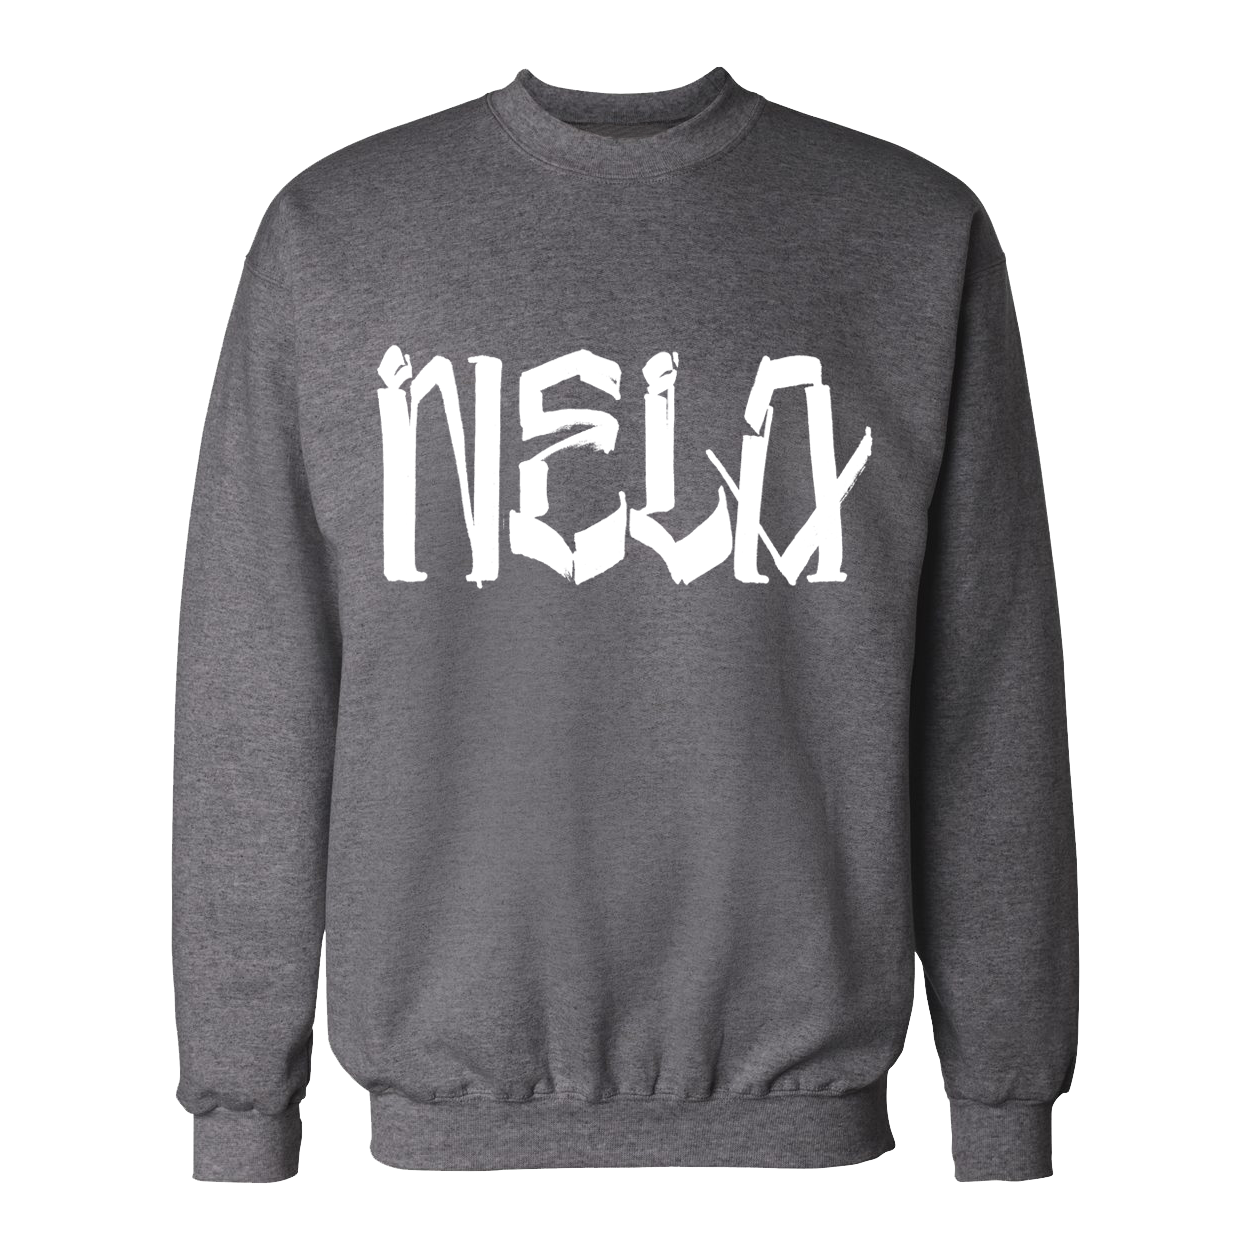 NELA by Chaz - Crew Sweatshirt (Light Steel)